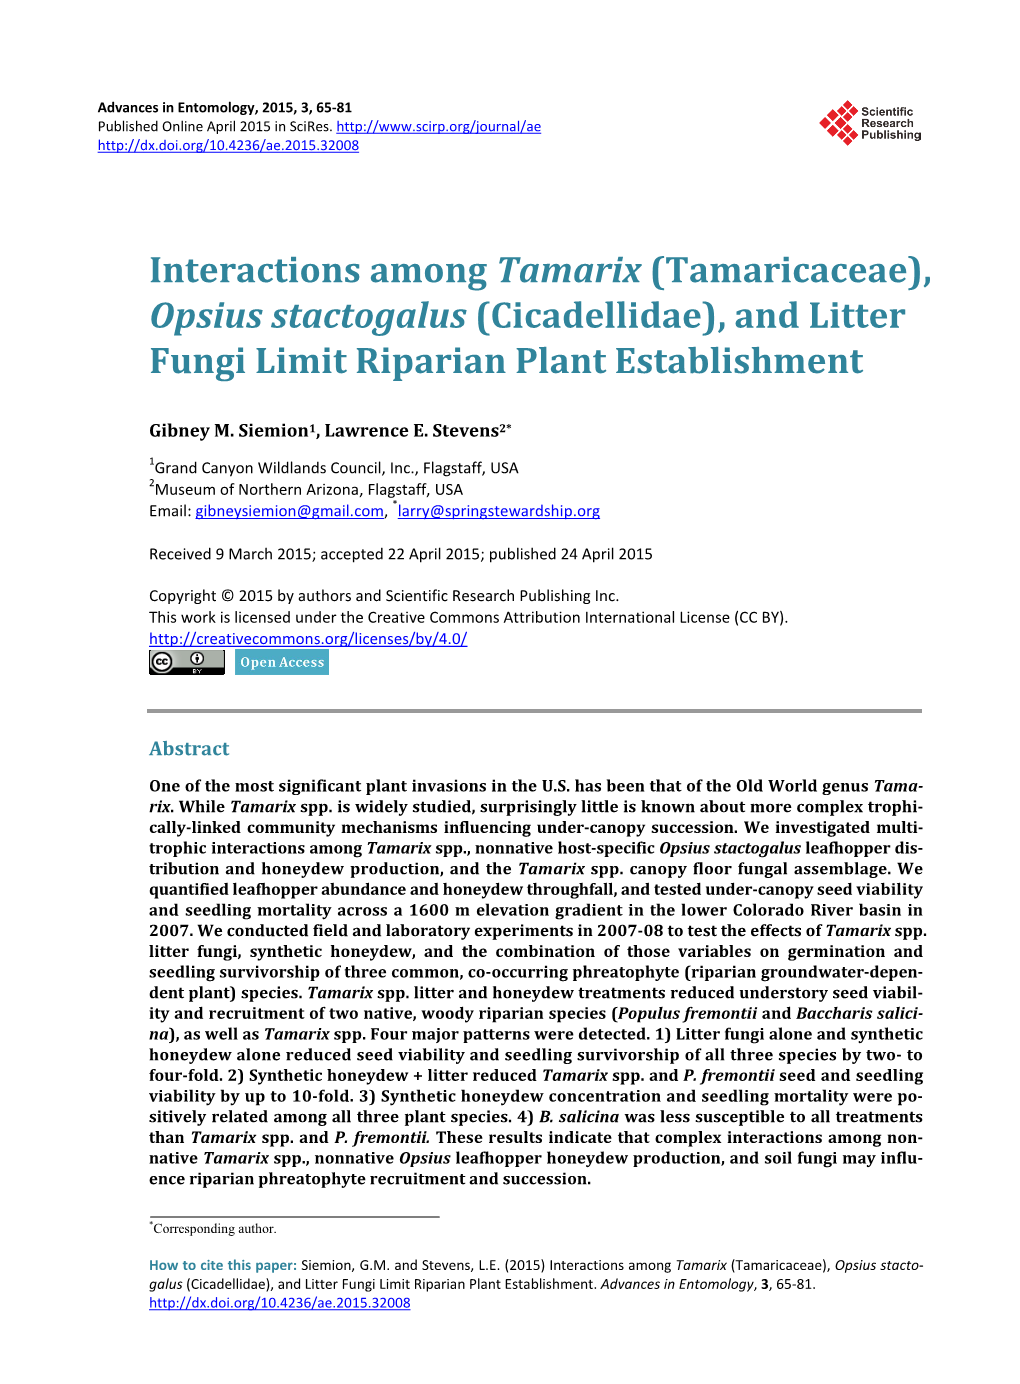 Opsius Stactogalus (Cicadellidae), and Litter Fungi Limit Riparian Plant Establishment